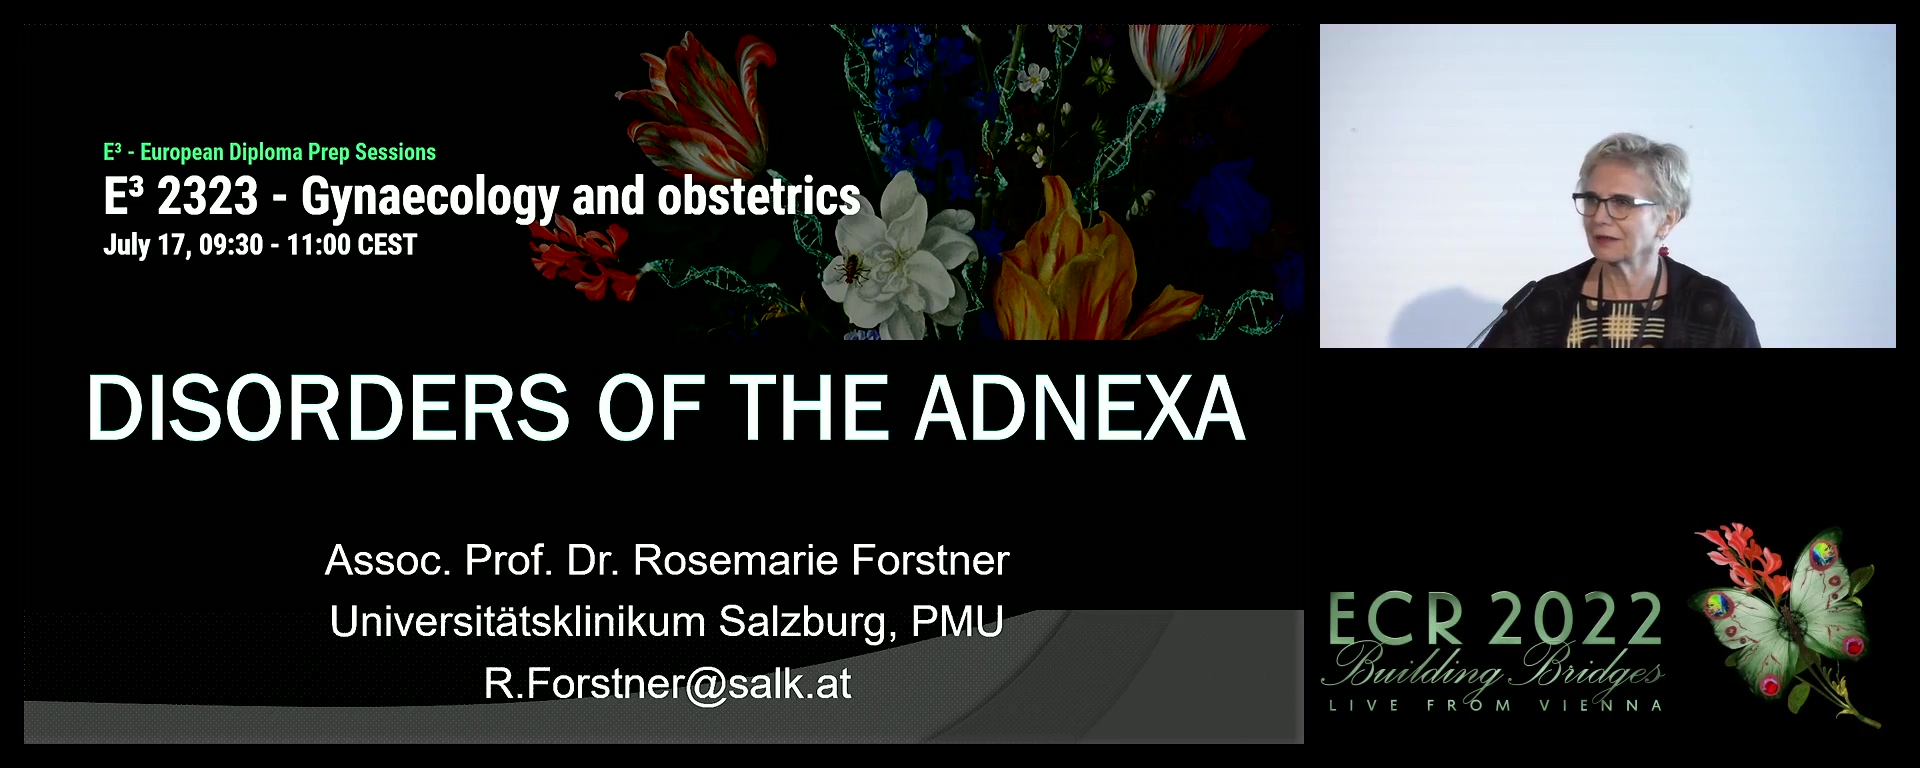 Disorders of the adnexa